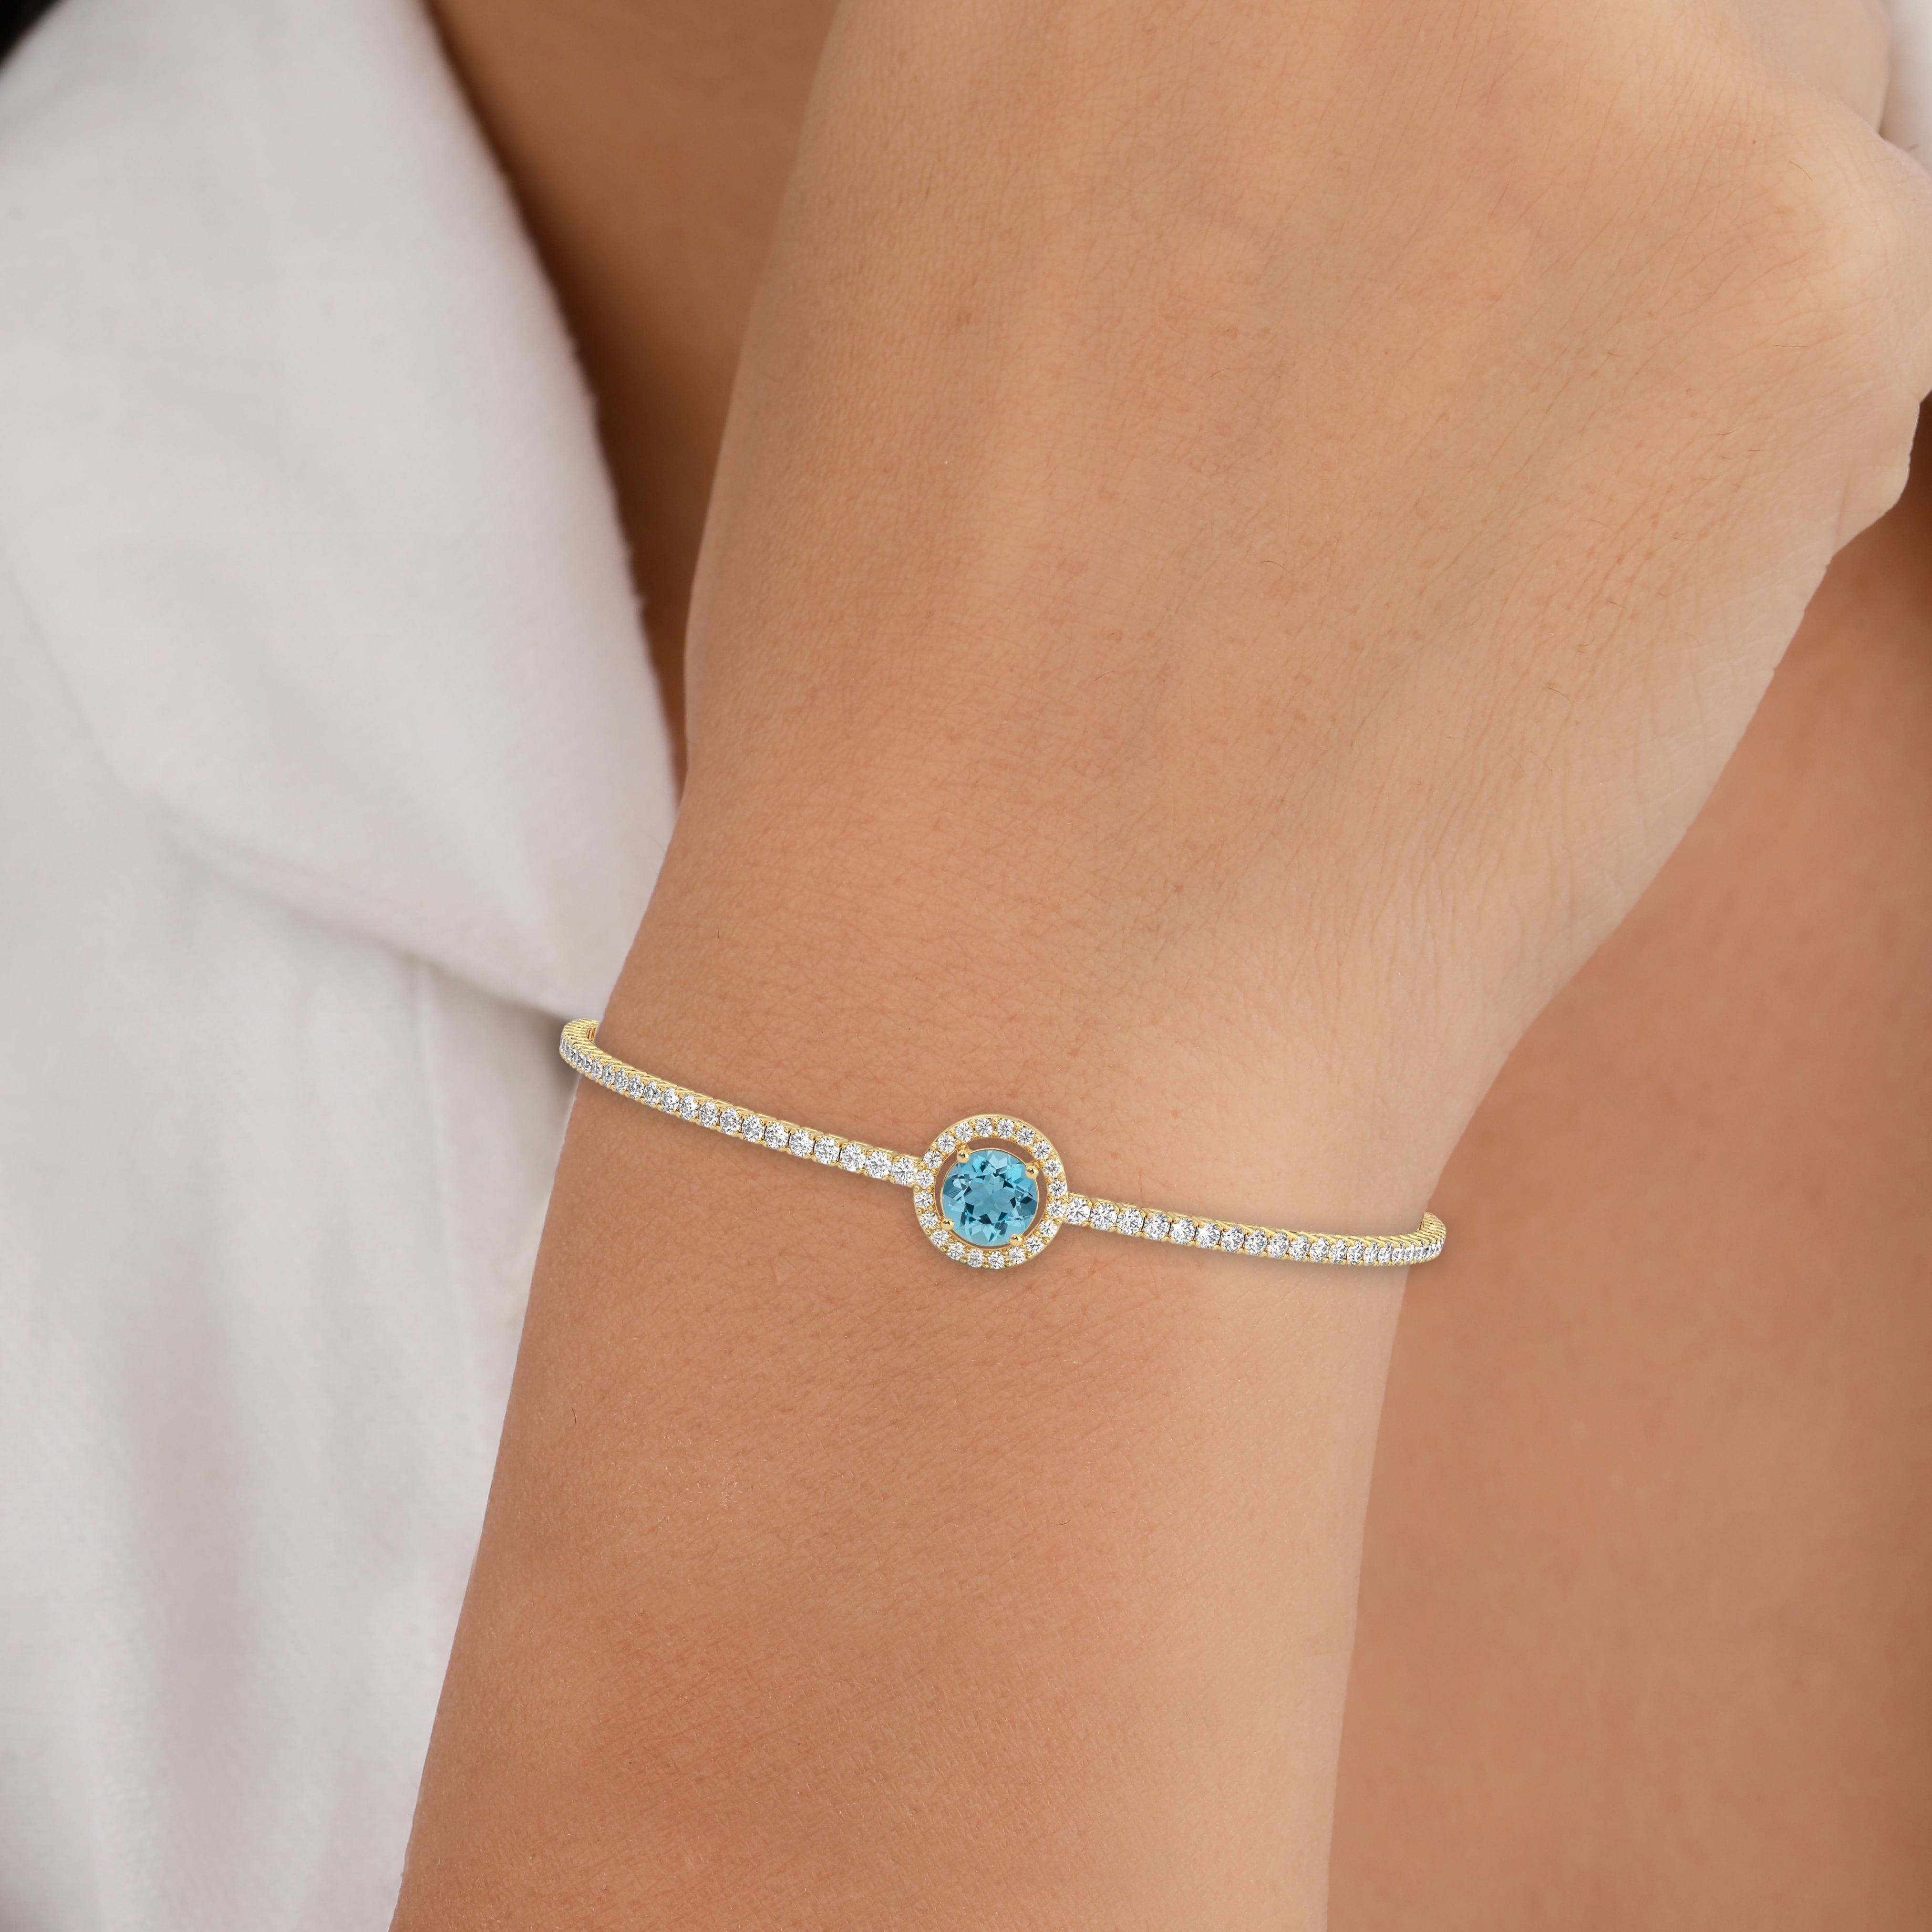 Bracelet With Arizona Turquoise and White Diamonds\